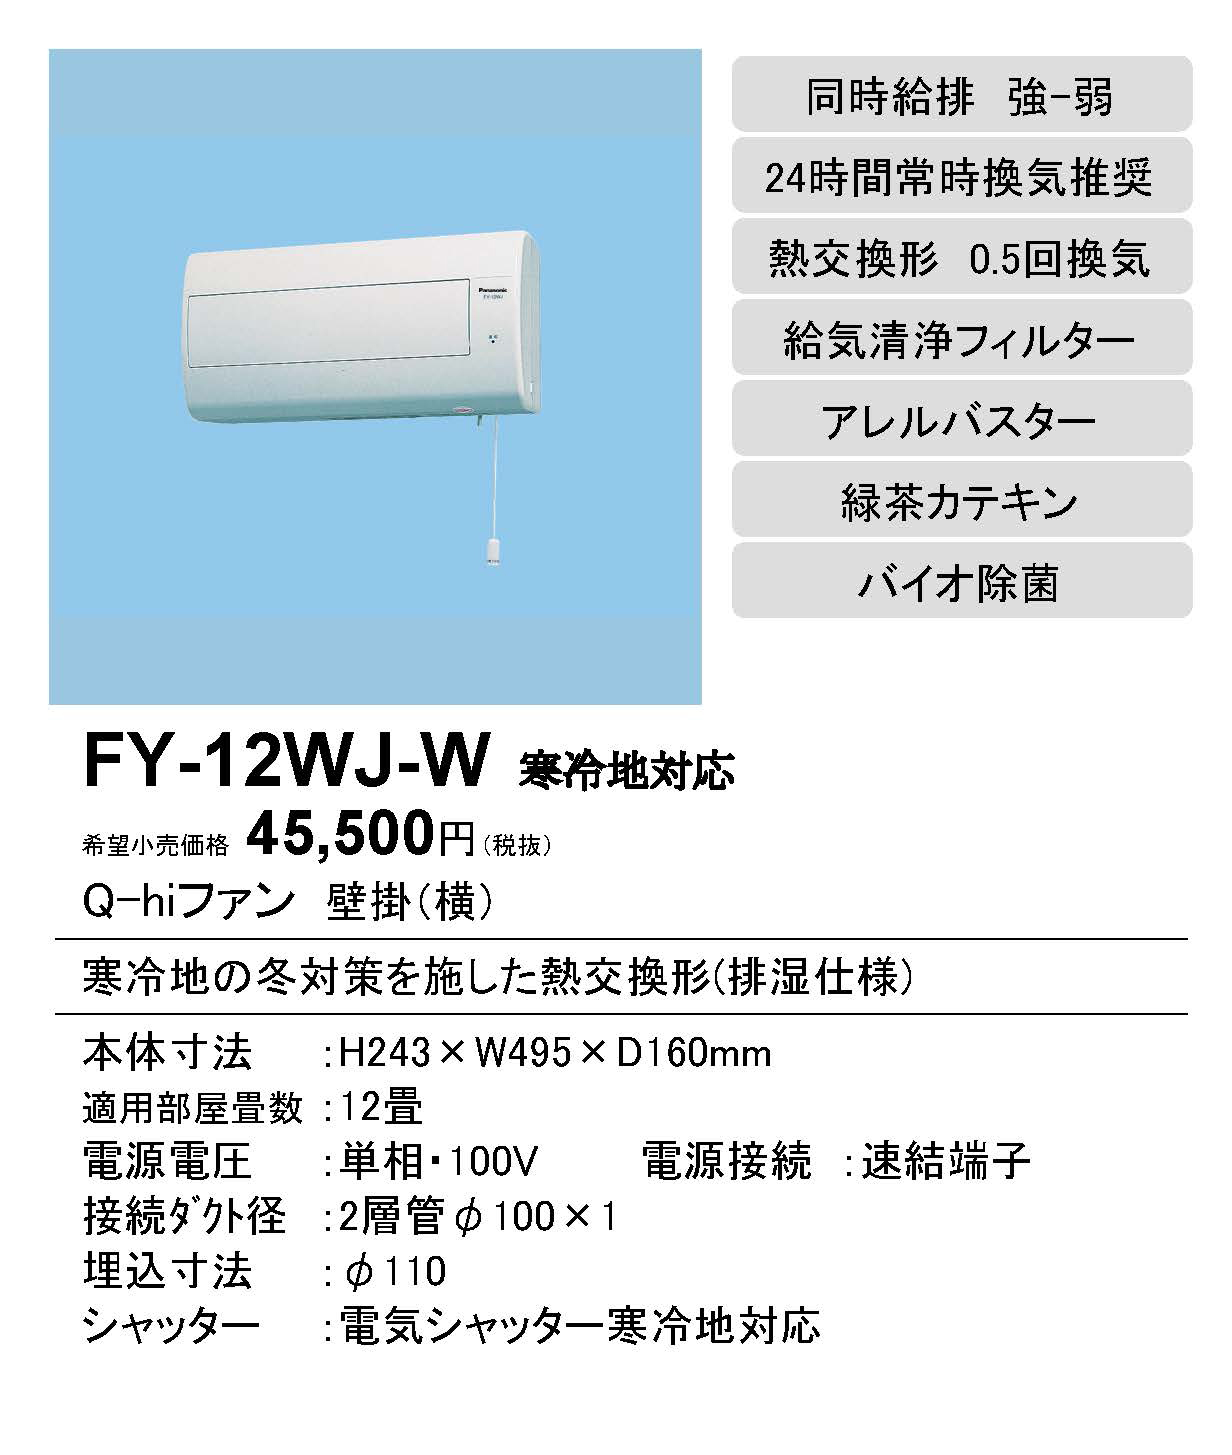 FY-12WJ-W | 換気扇 | パナソニック Panasonic Q-hiファン壁掛形・1 